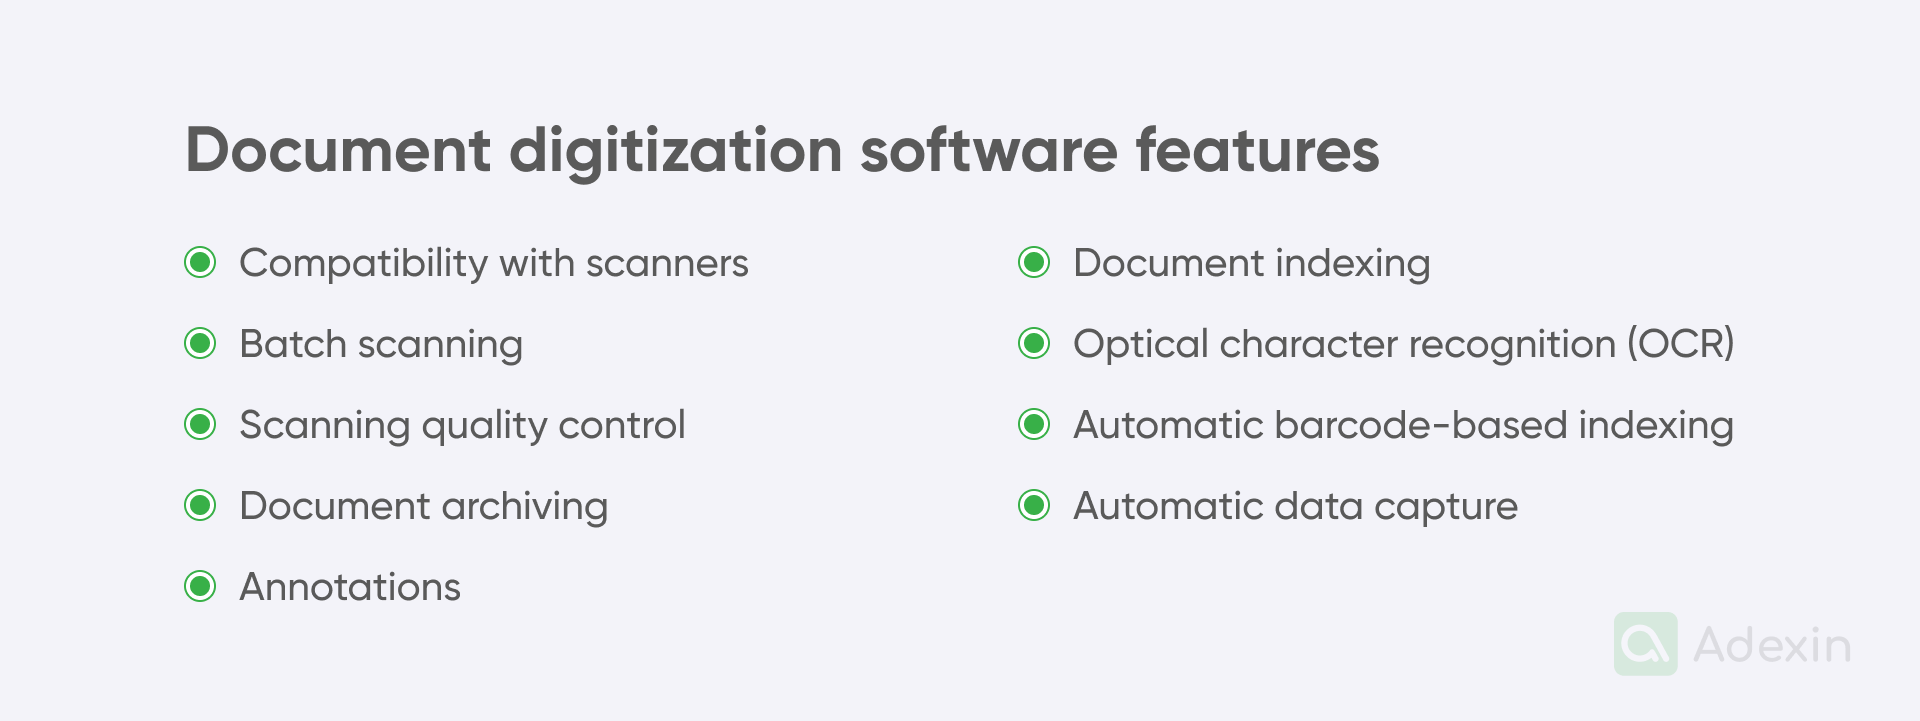 Document digitization software features